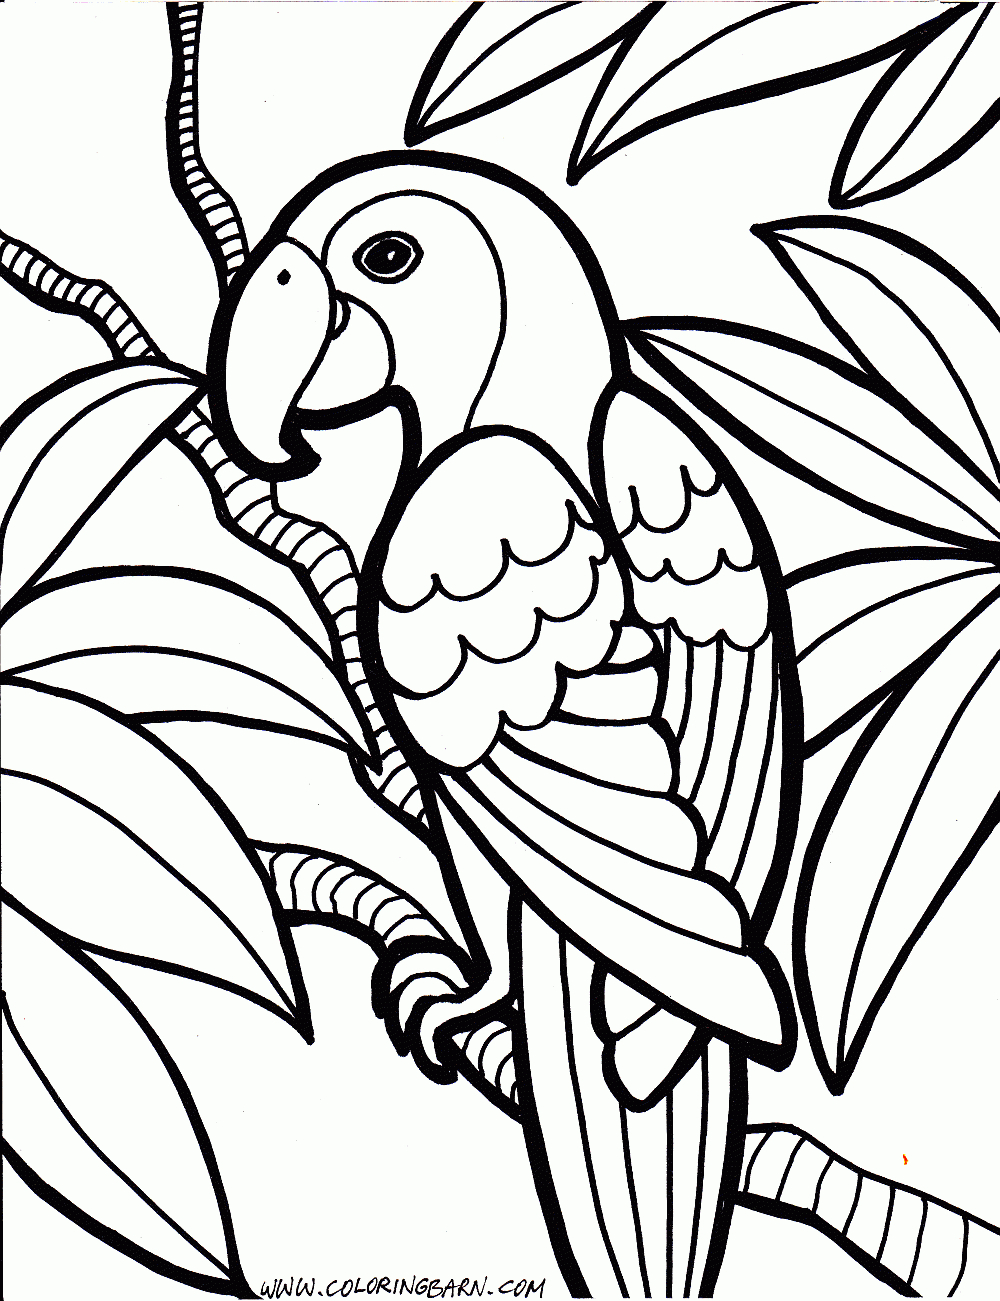 Parrot Coloring Pages | Cinderella | Pinterest | Coloring Pages - Free Printable Parrot Coloring Pages